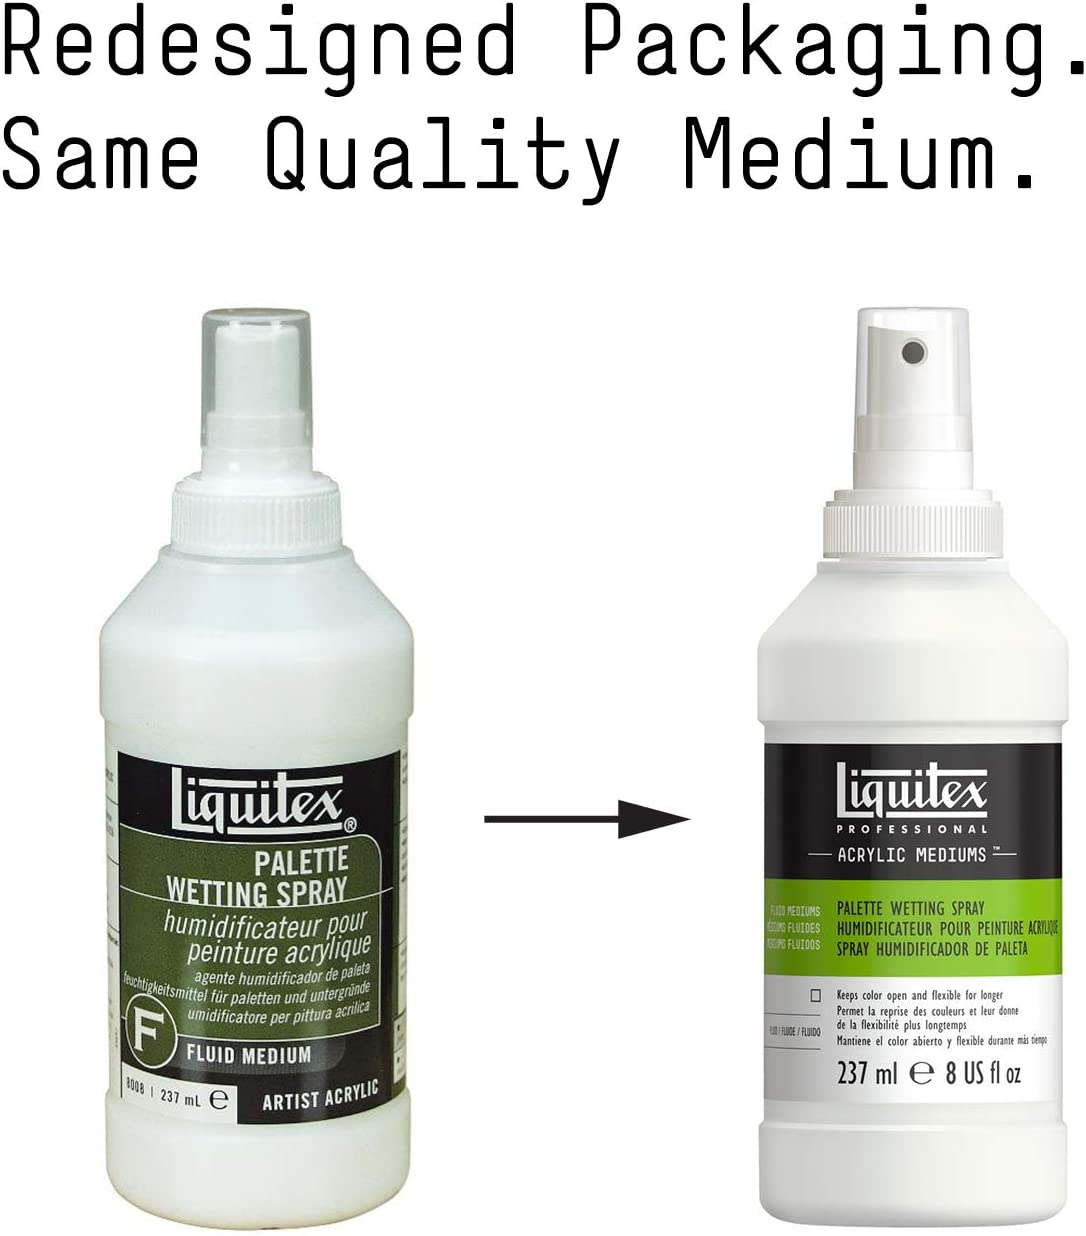 Liquitex Palette Wetting Spray, 8 oz. - image 2 of 10